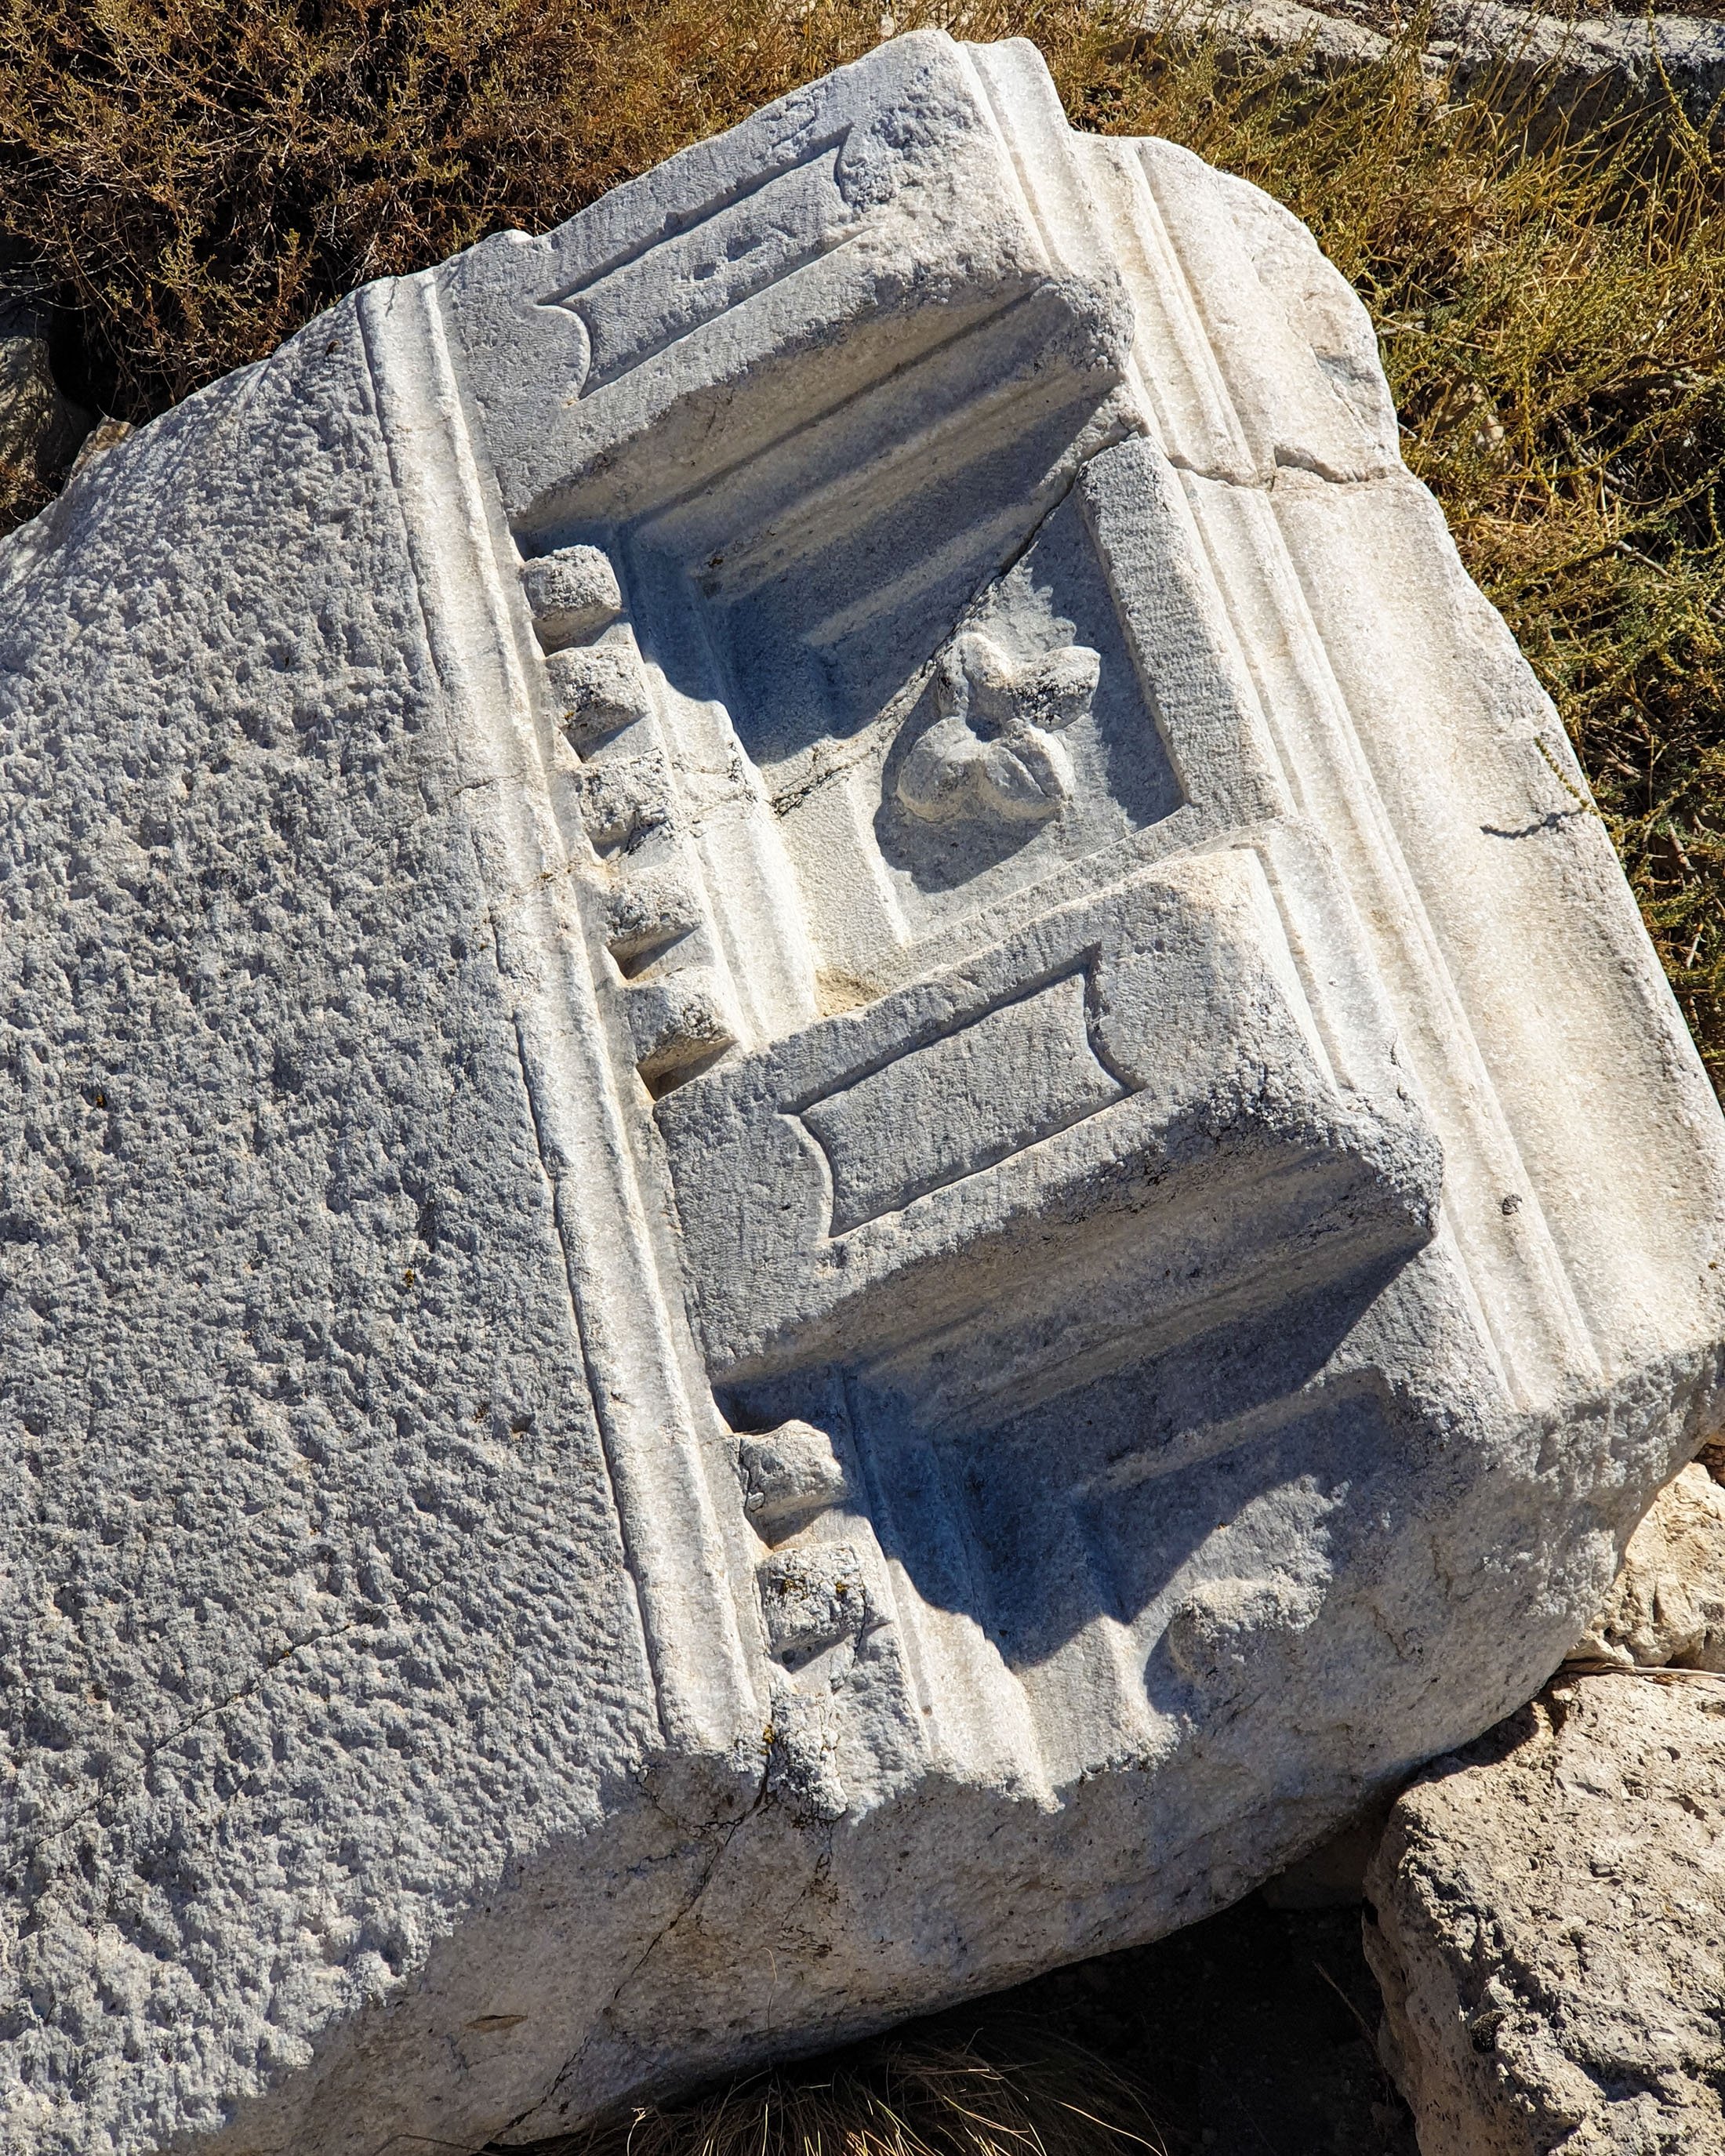 A grave stele on the mysterious field. (Photo by Argun Konuk)